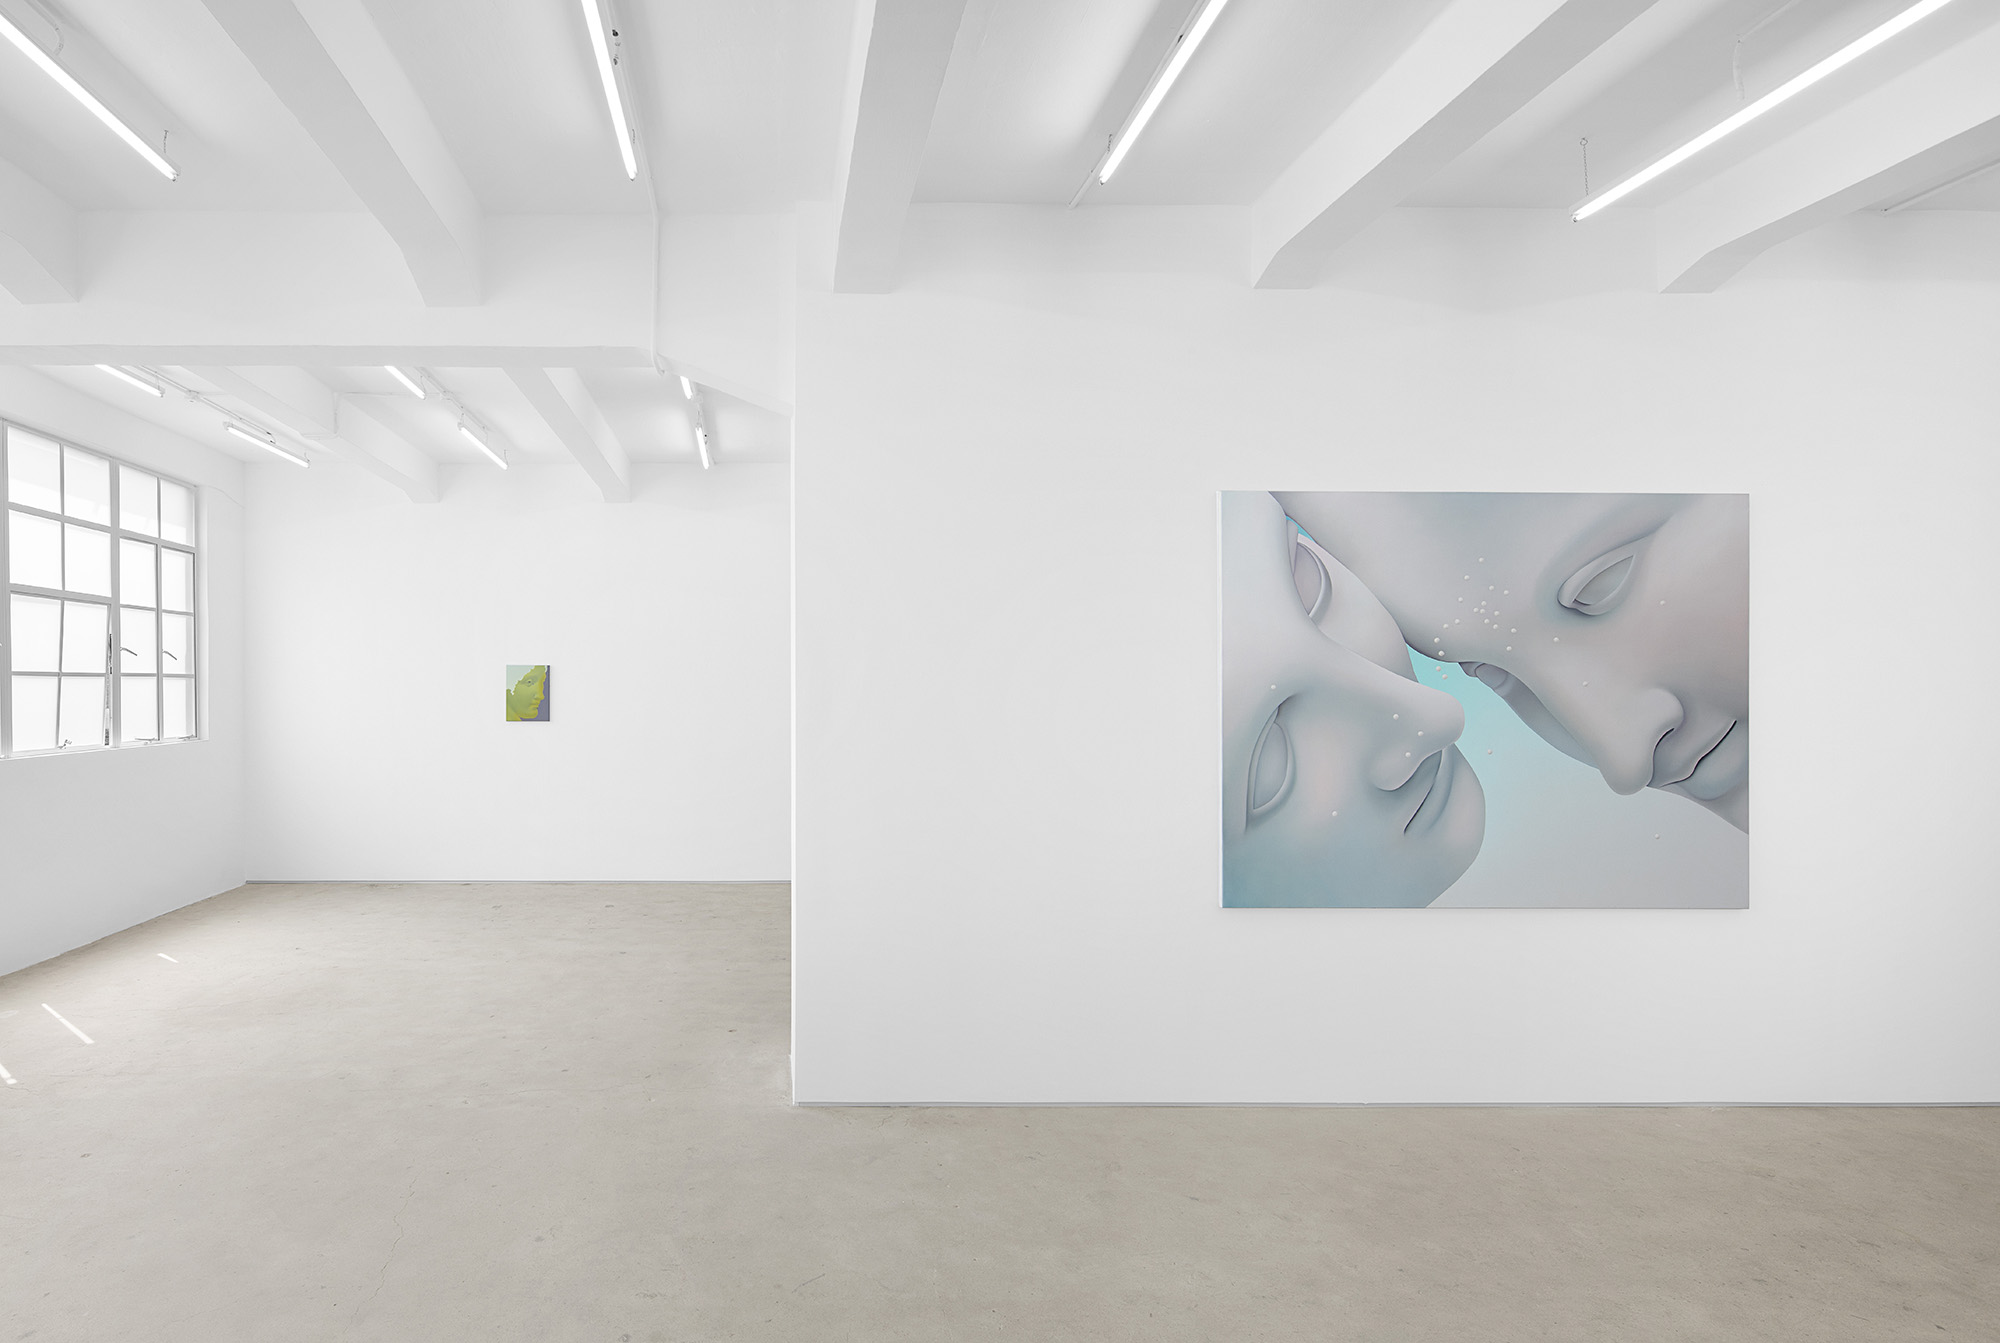 Vivian Greven, The Negatives, solo exhibition at Gallery Vacancy, installation view 15